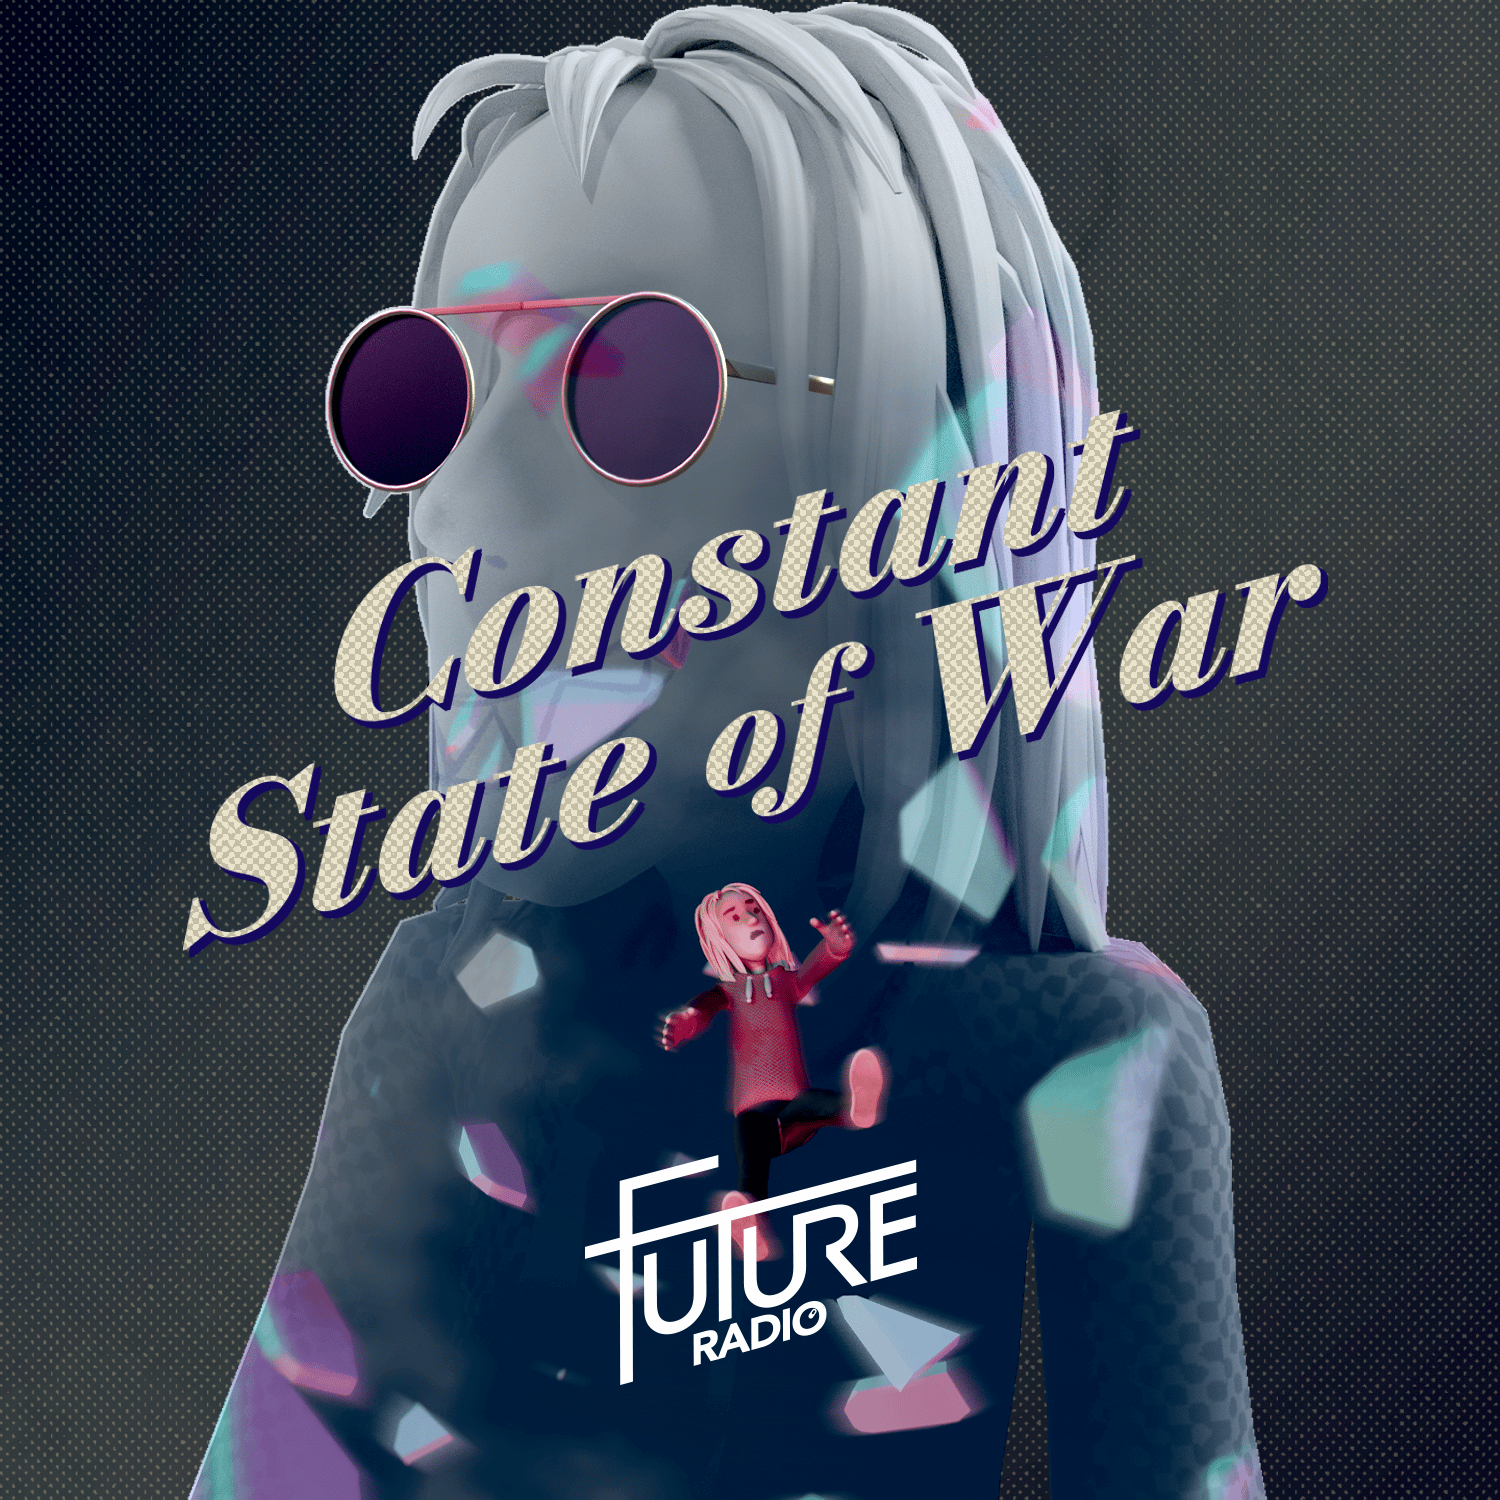 Future Radio - Constant State of War Single Cover